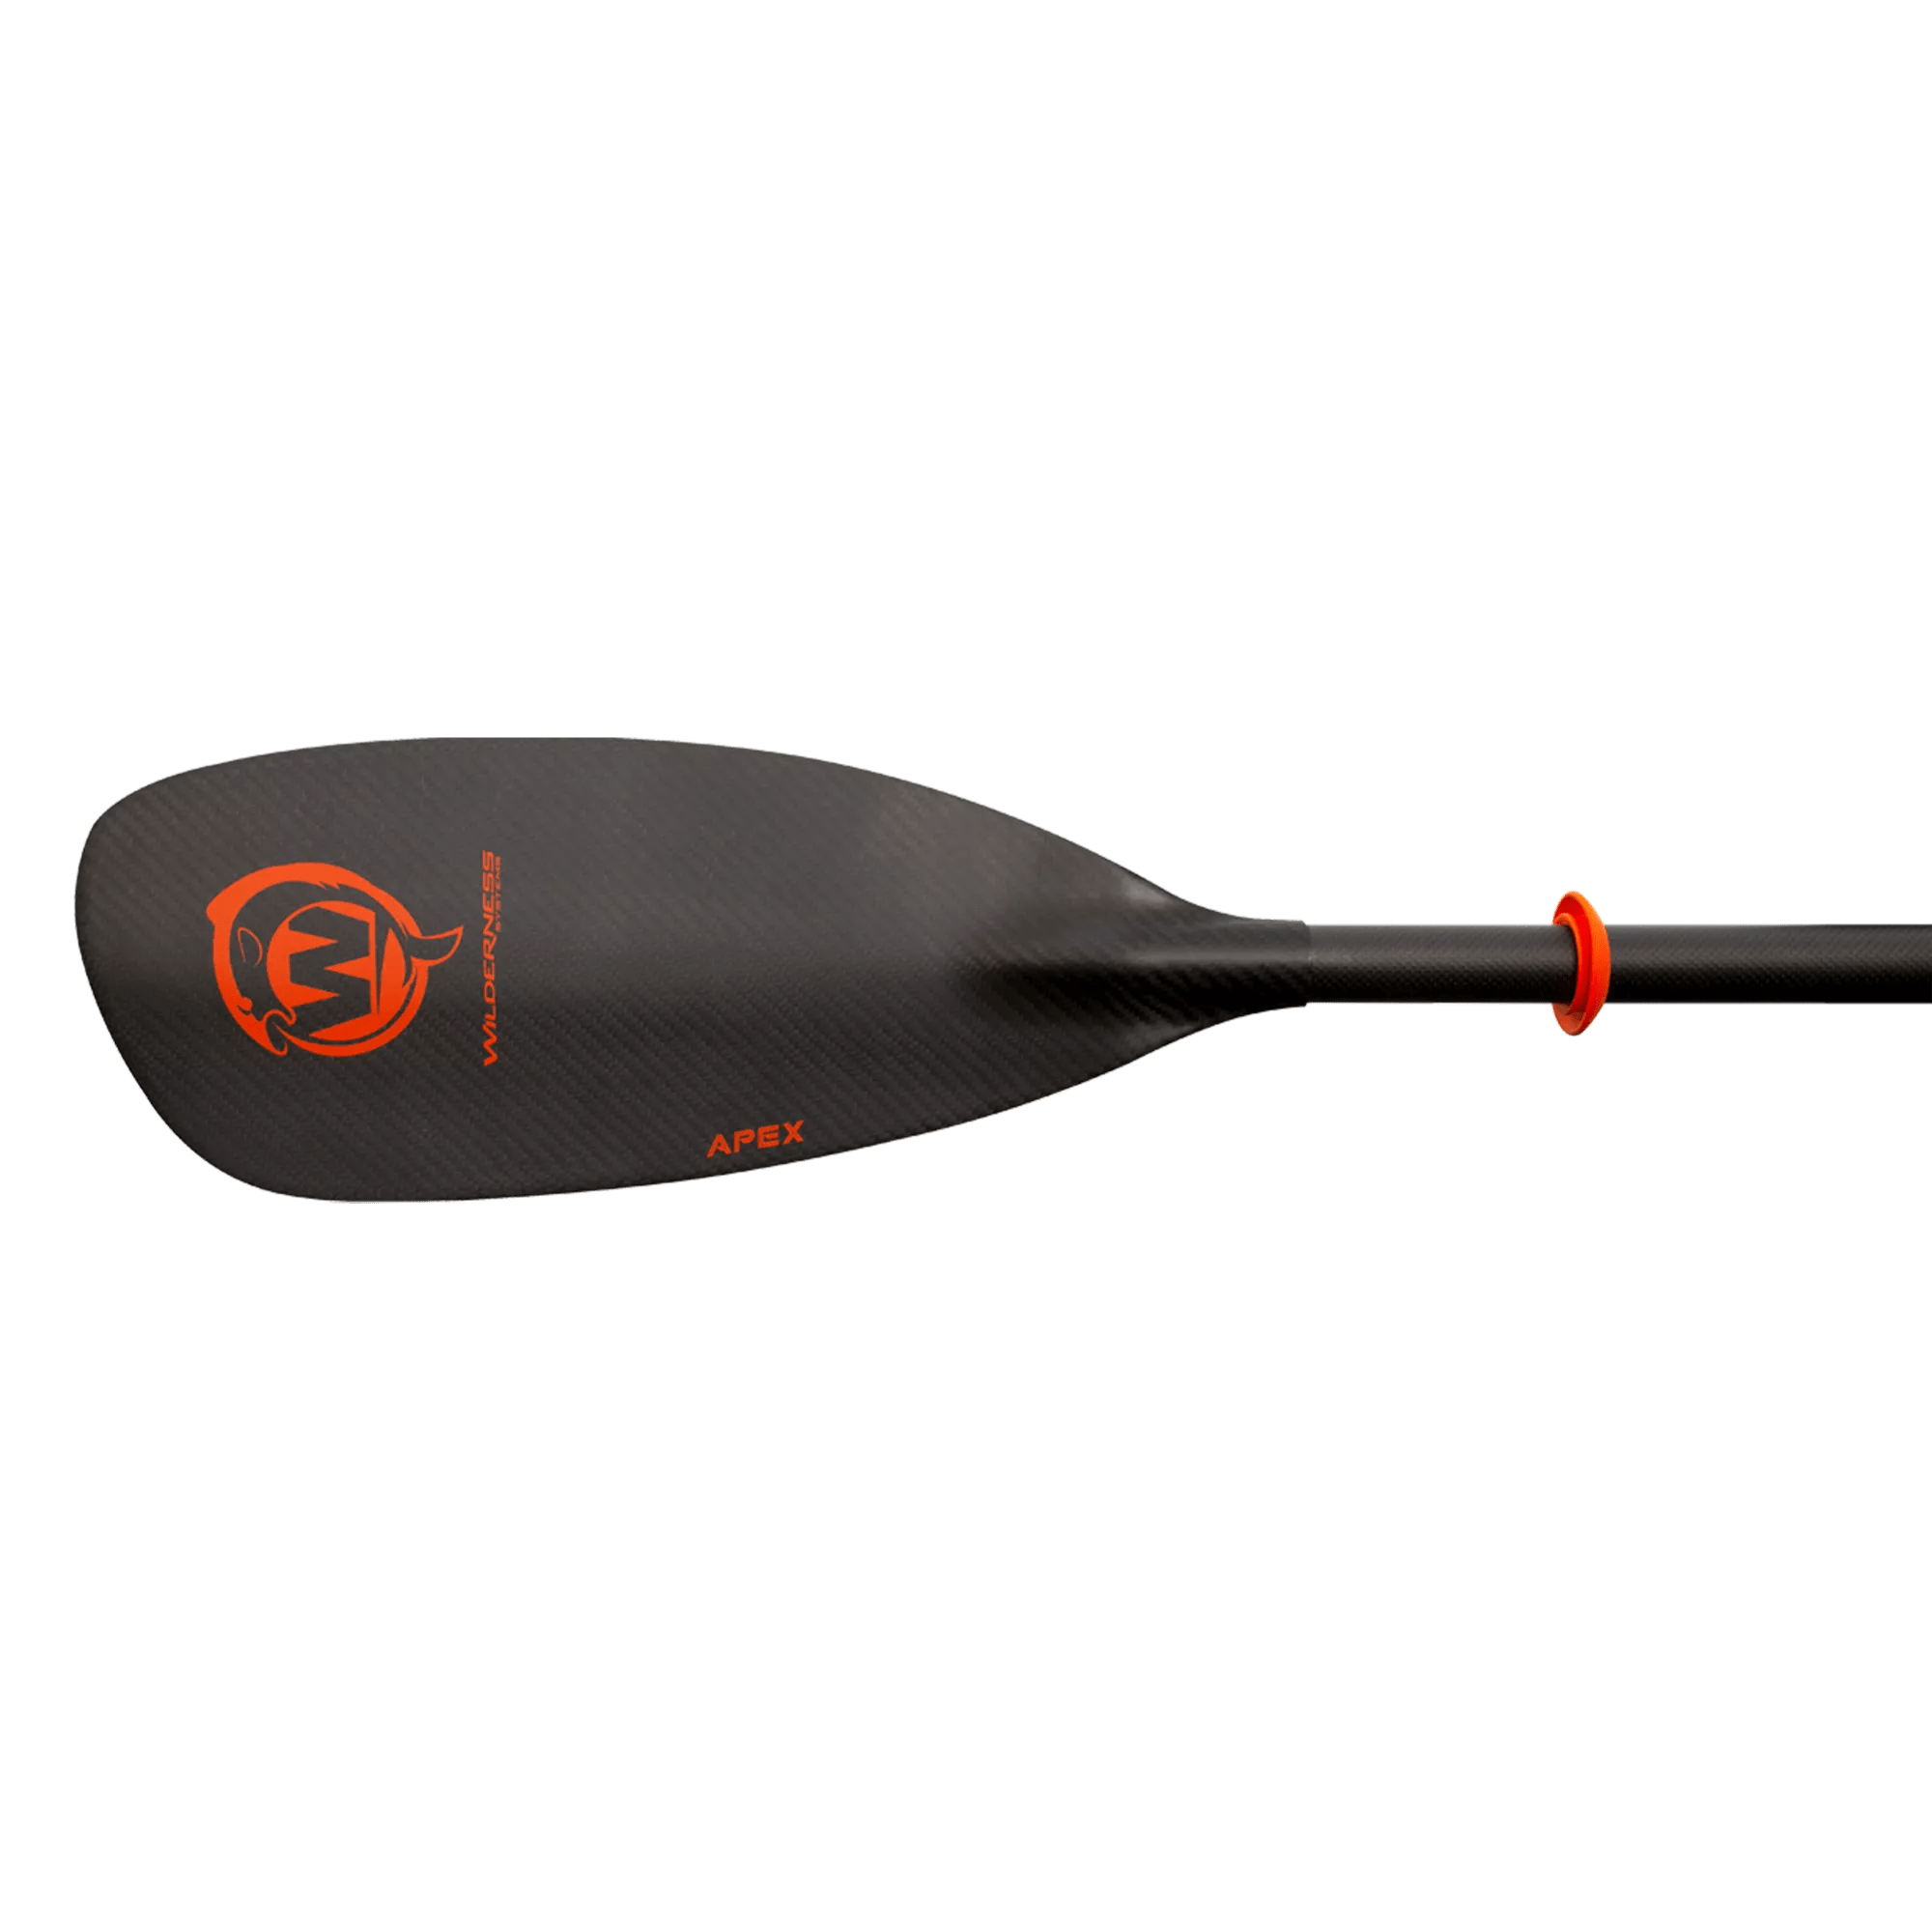 WILDERNESS SYSTEMS - Apex Carbon Angler Kayak Paddle 240-260 cm - Orange - 8070208 - TOP